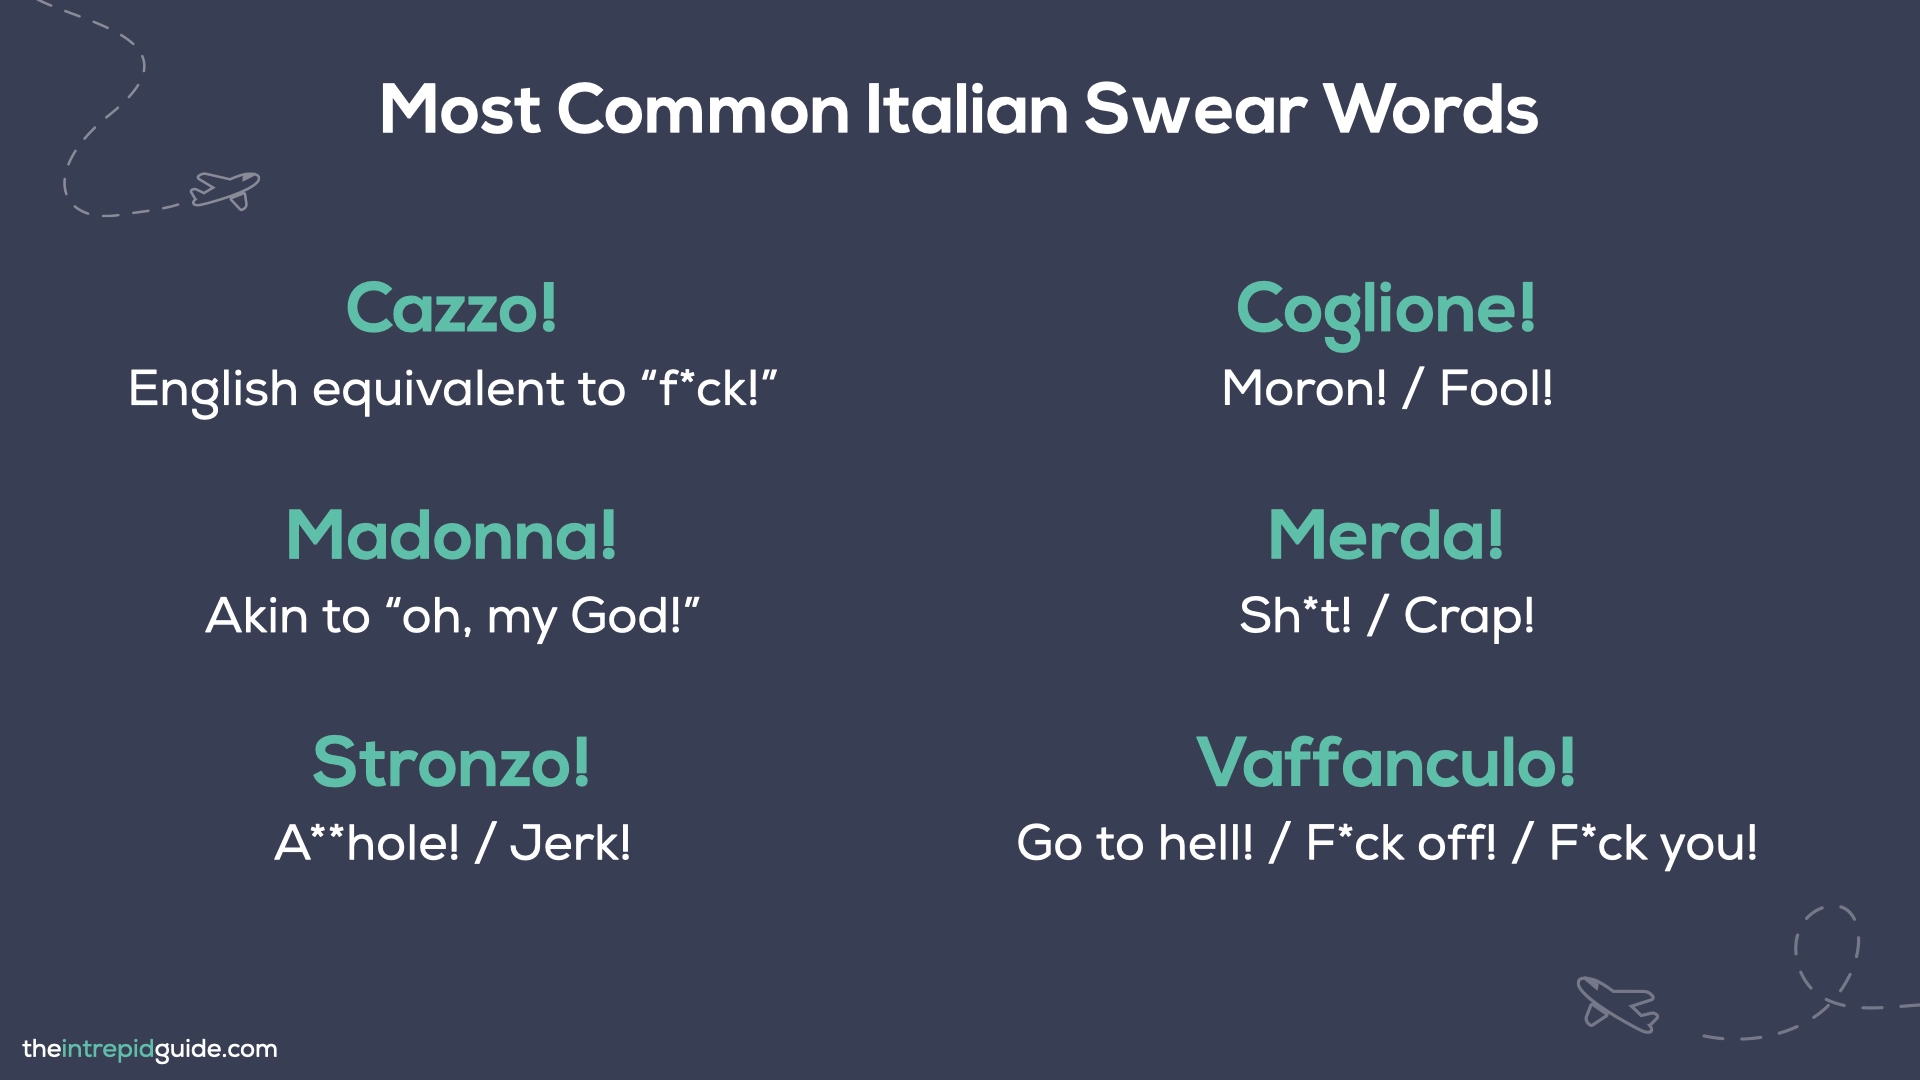 Italian Swear Words - List of most common Italian curse words